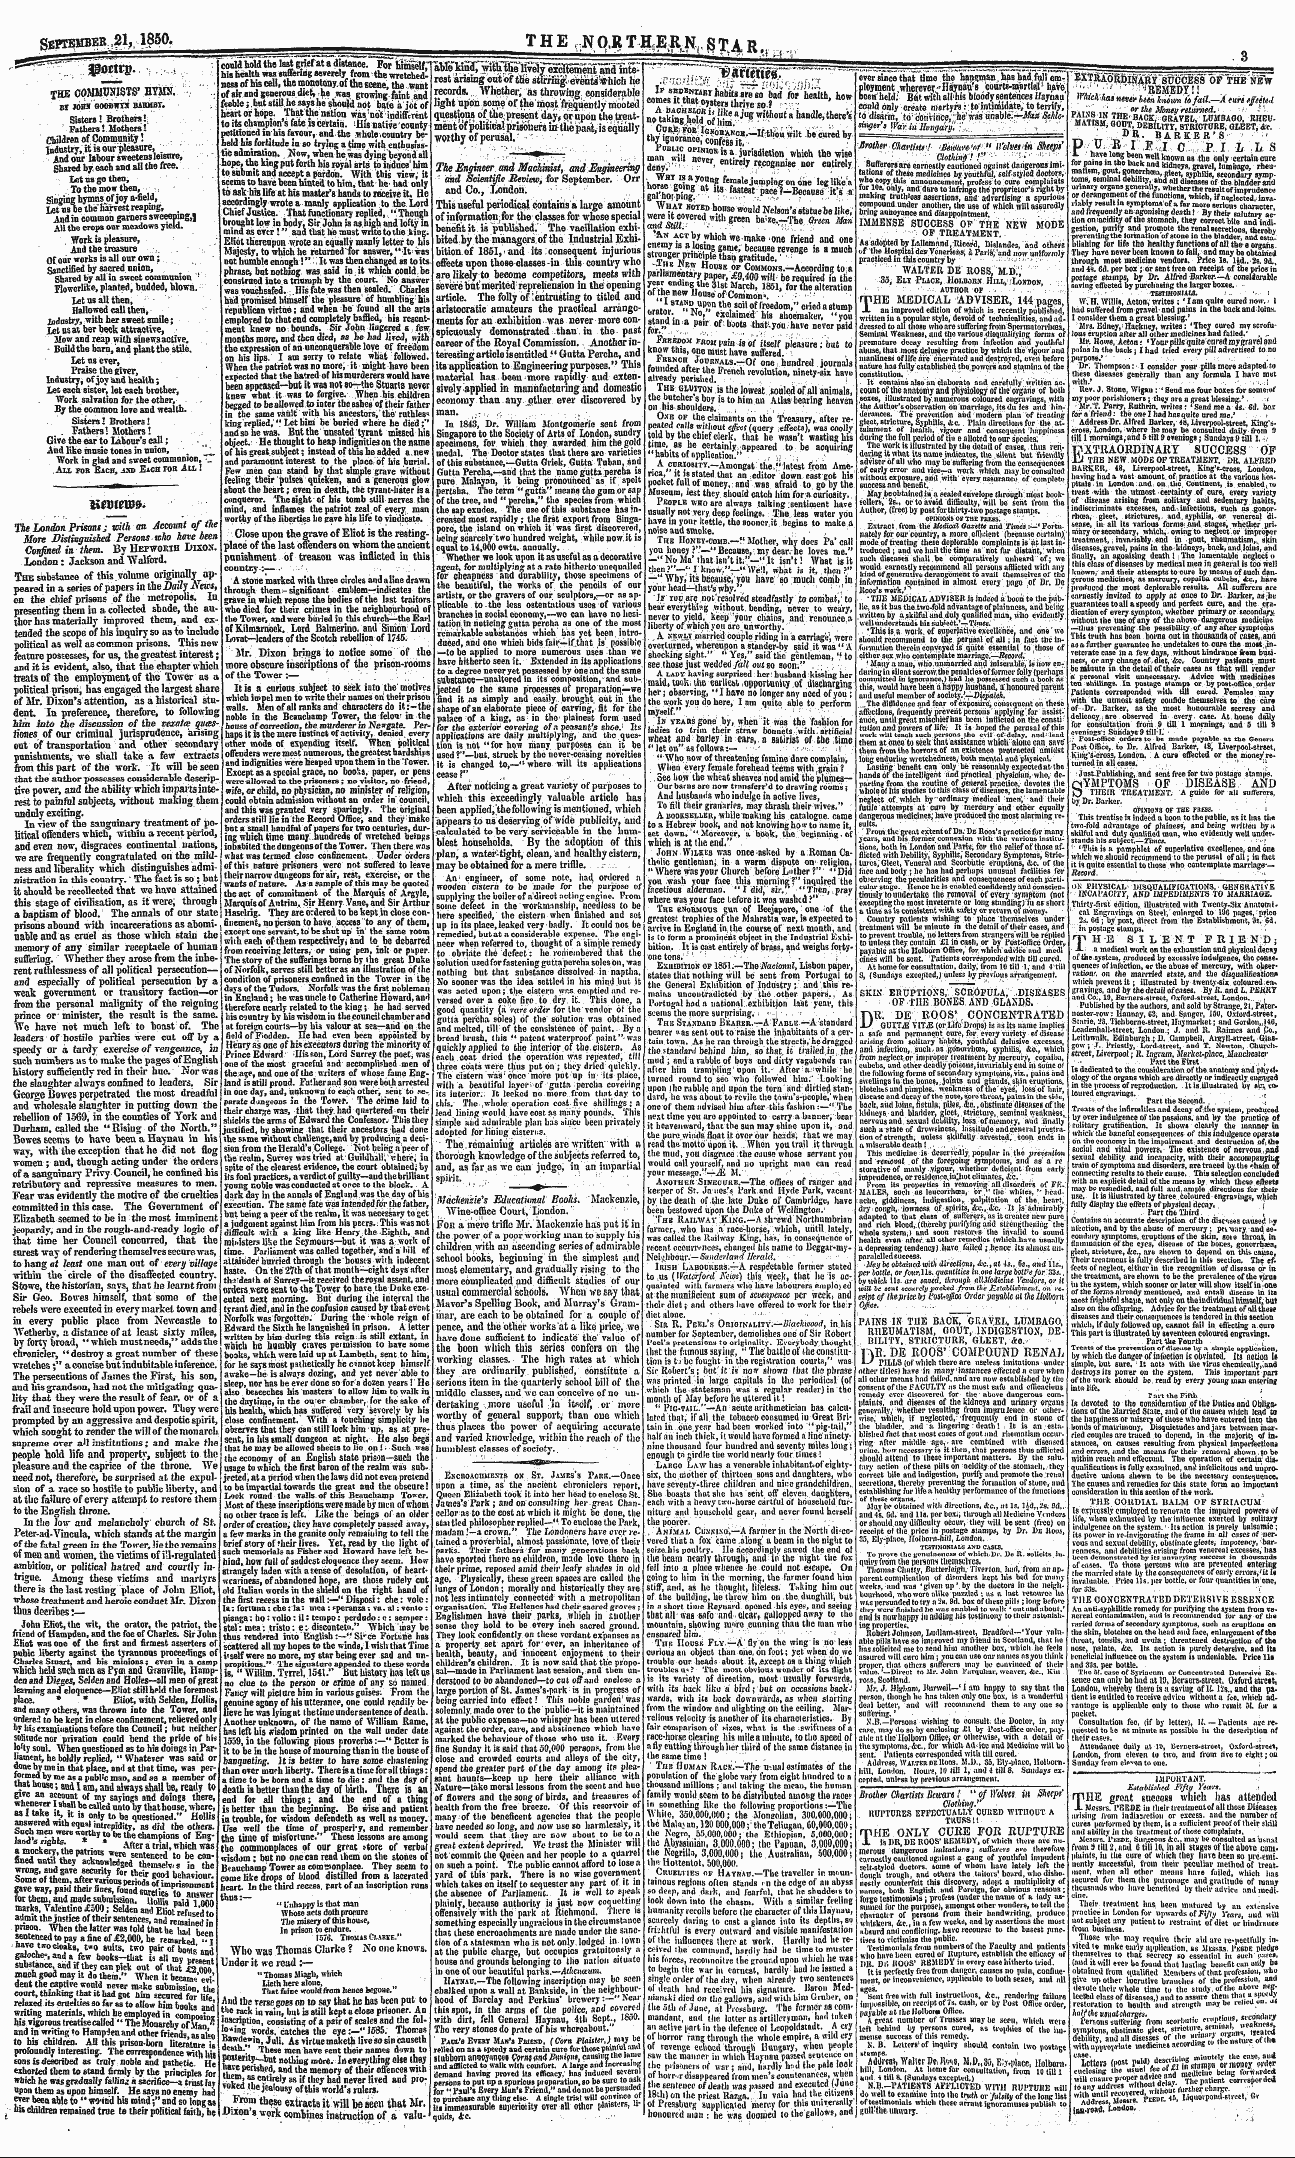 Northern Star (1837-1852): jS F Y, 3rd edition - Ad00317